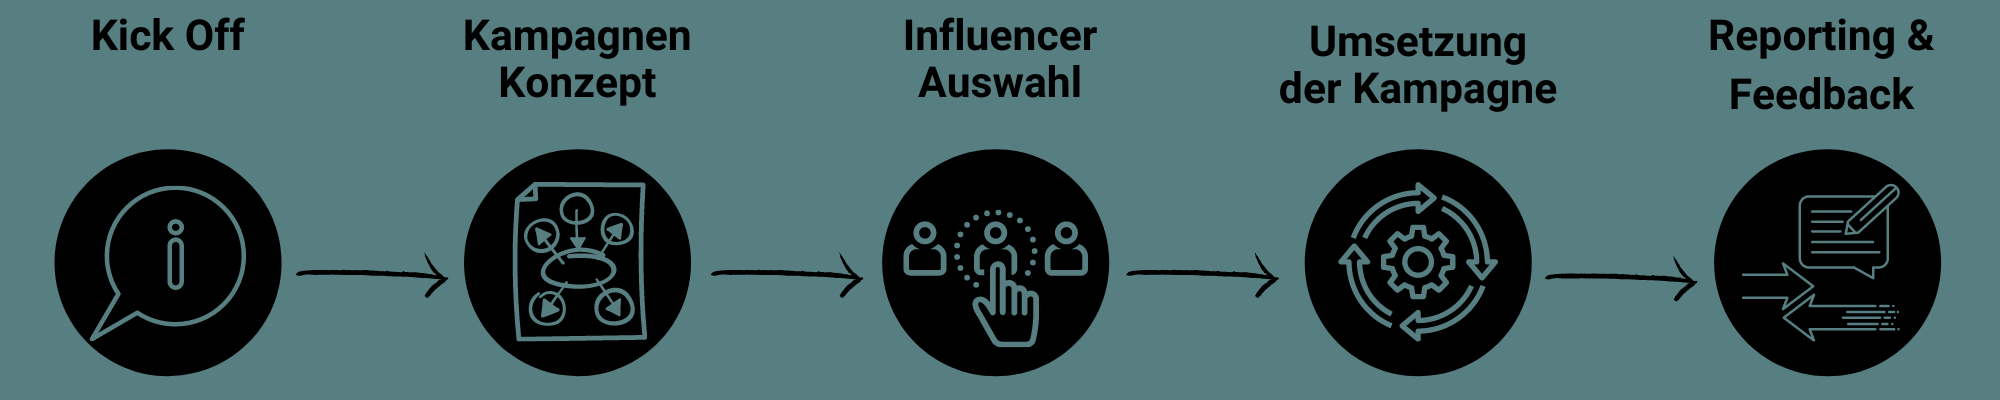 Ablauf Influencer Marketing bei sosocial agency